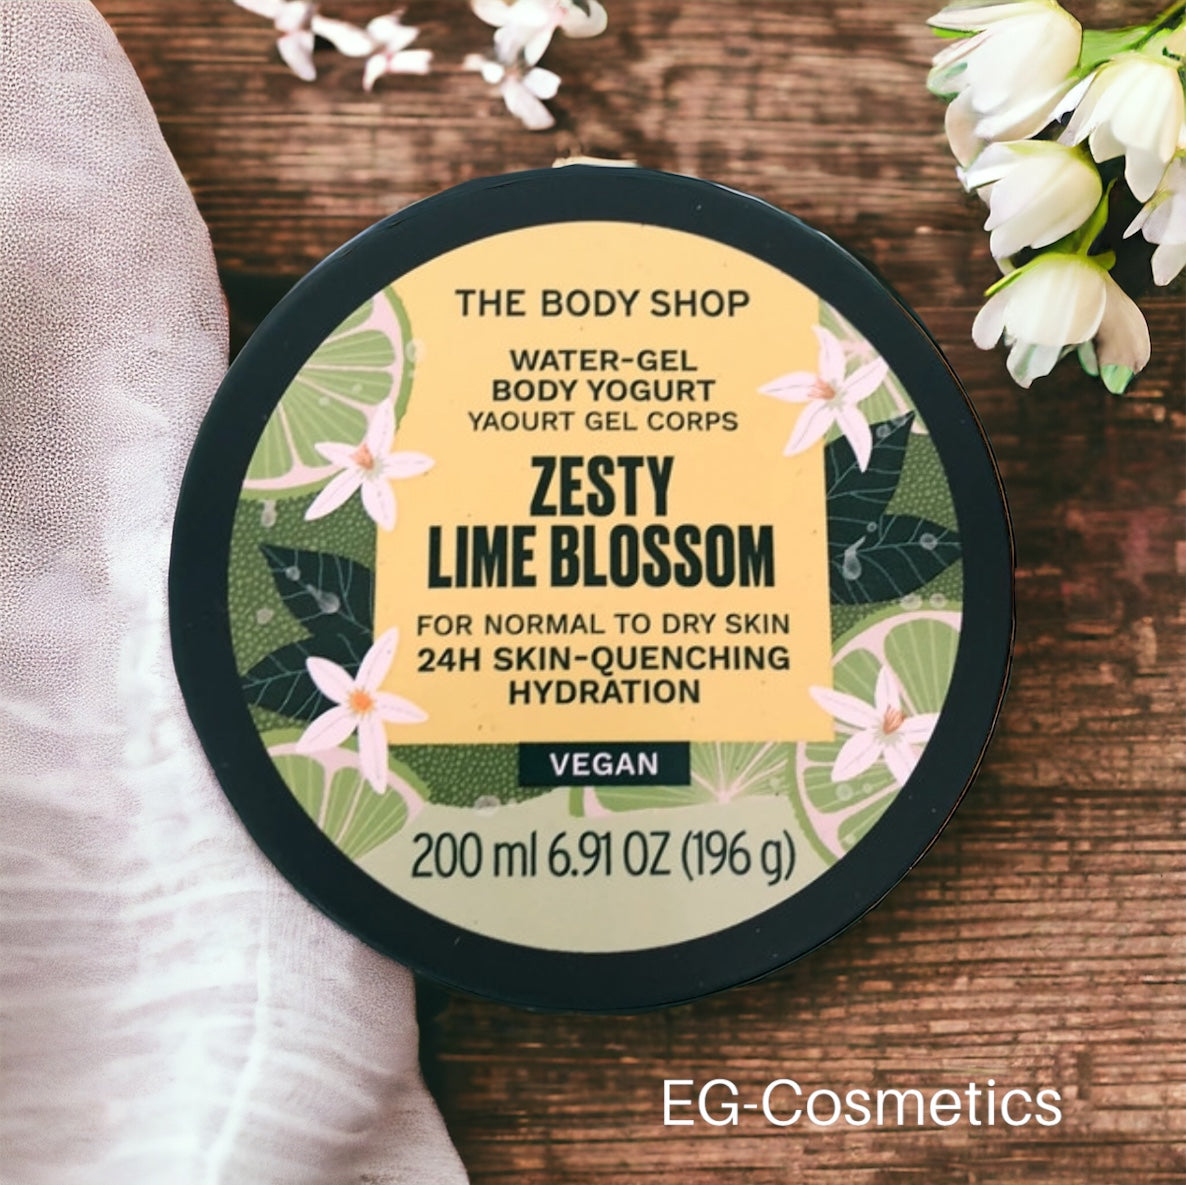 The Body Shop 'Zesty Lime Blossom' Water-Gel Body Yoghurt 200ml